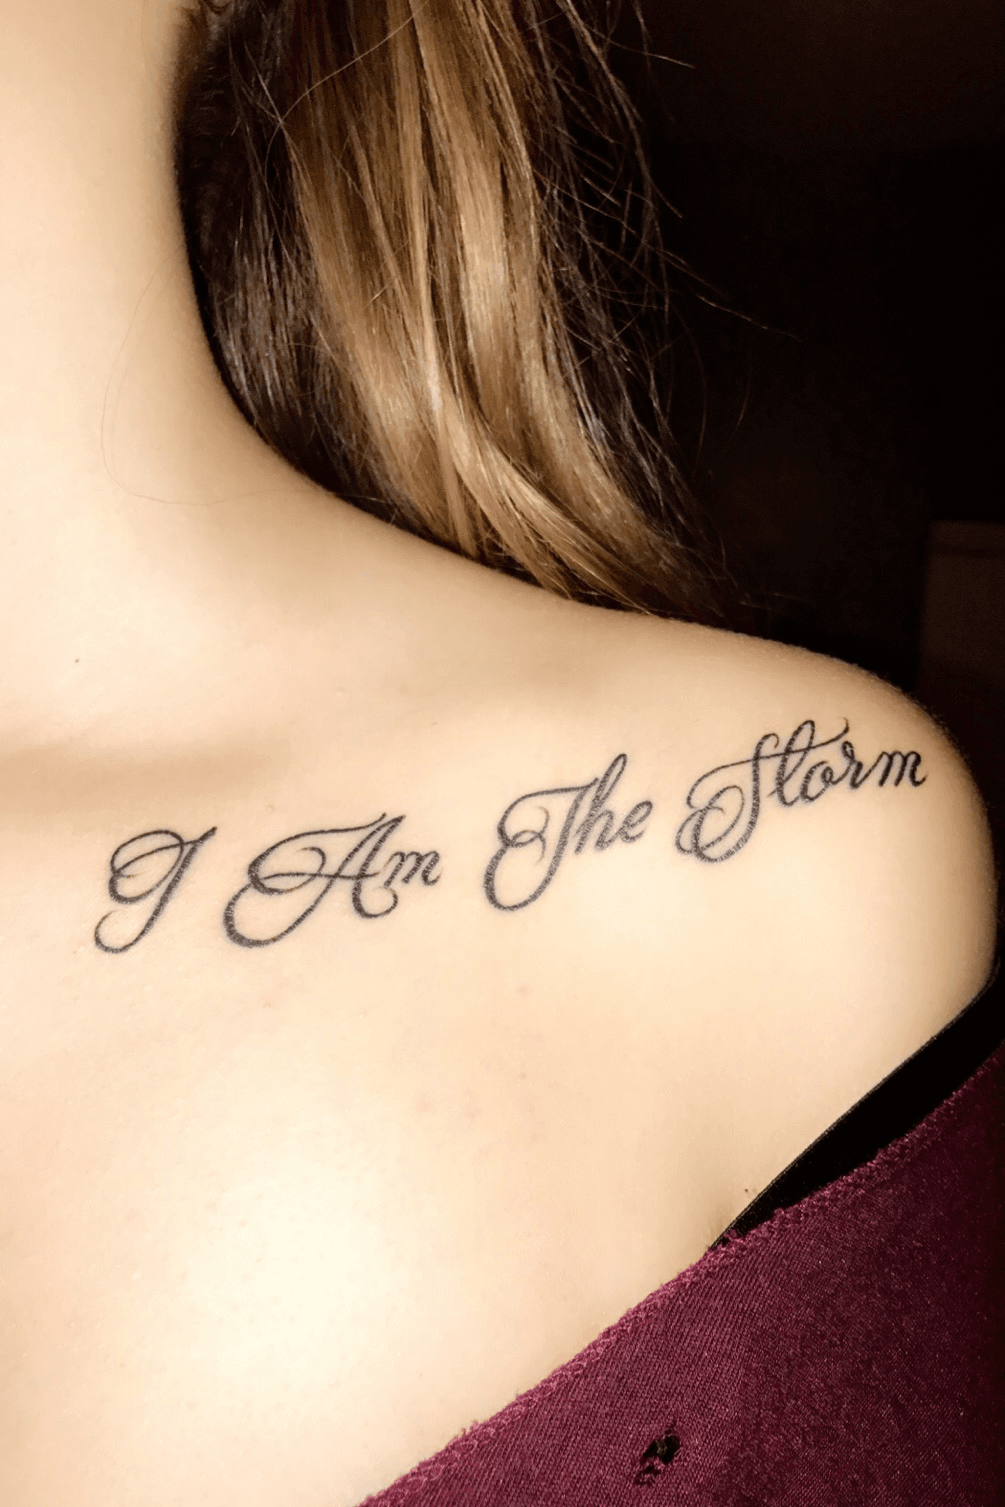 Hgksilcst  Tattoo quotes Forearm tattoo women Thigh tattoos women